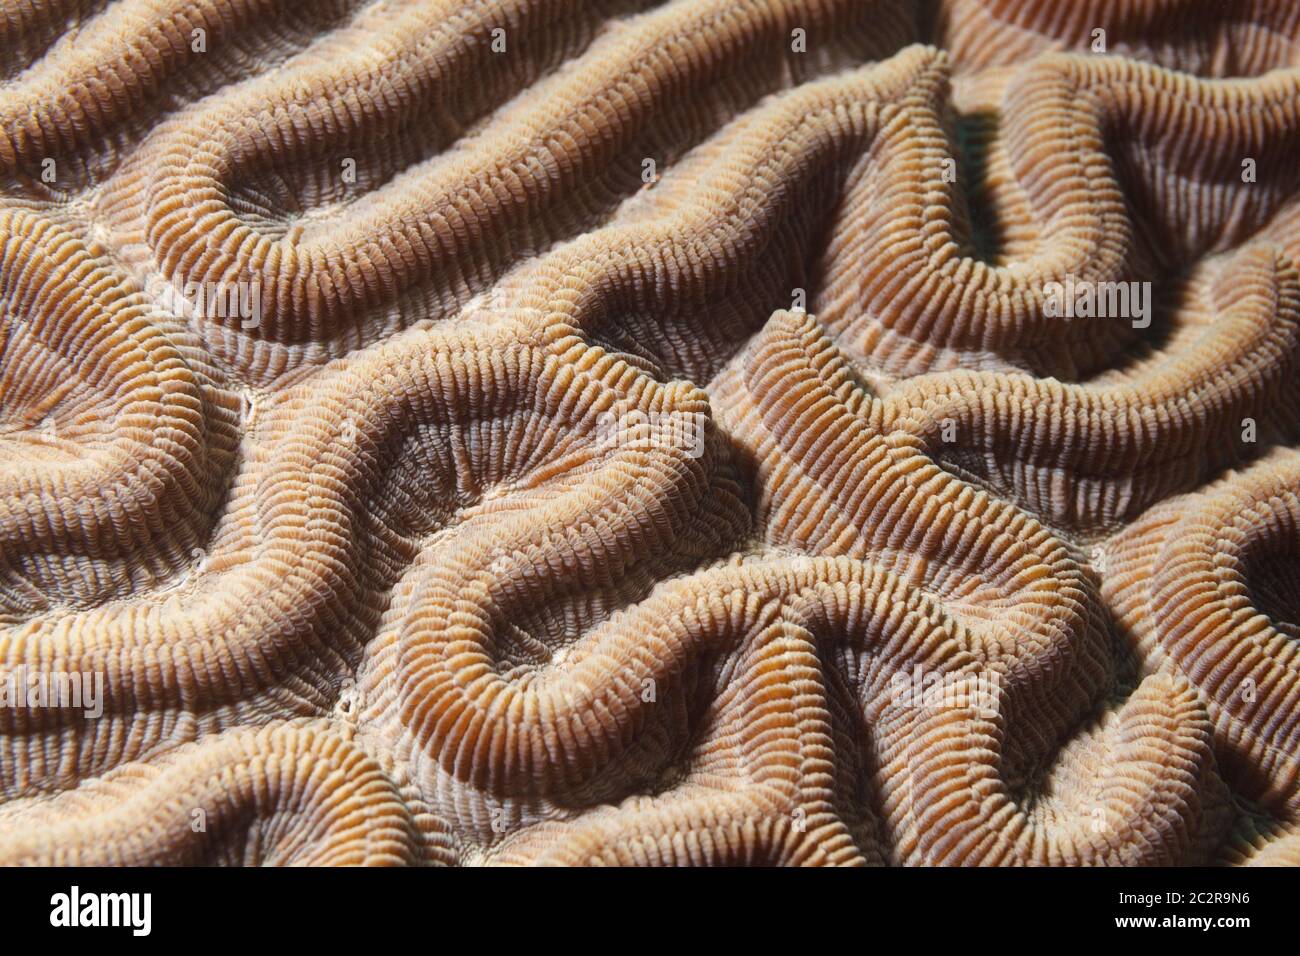 Close-up of brain coral (Diploria) in the Caribbean sea around Bonaire. Photo: ©Vanessa Devolder Stock Photo